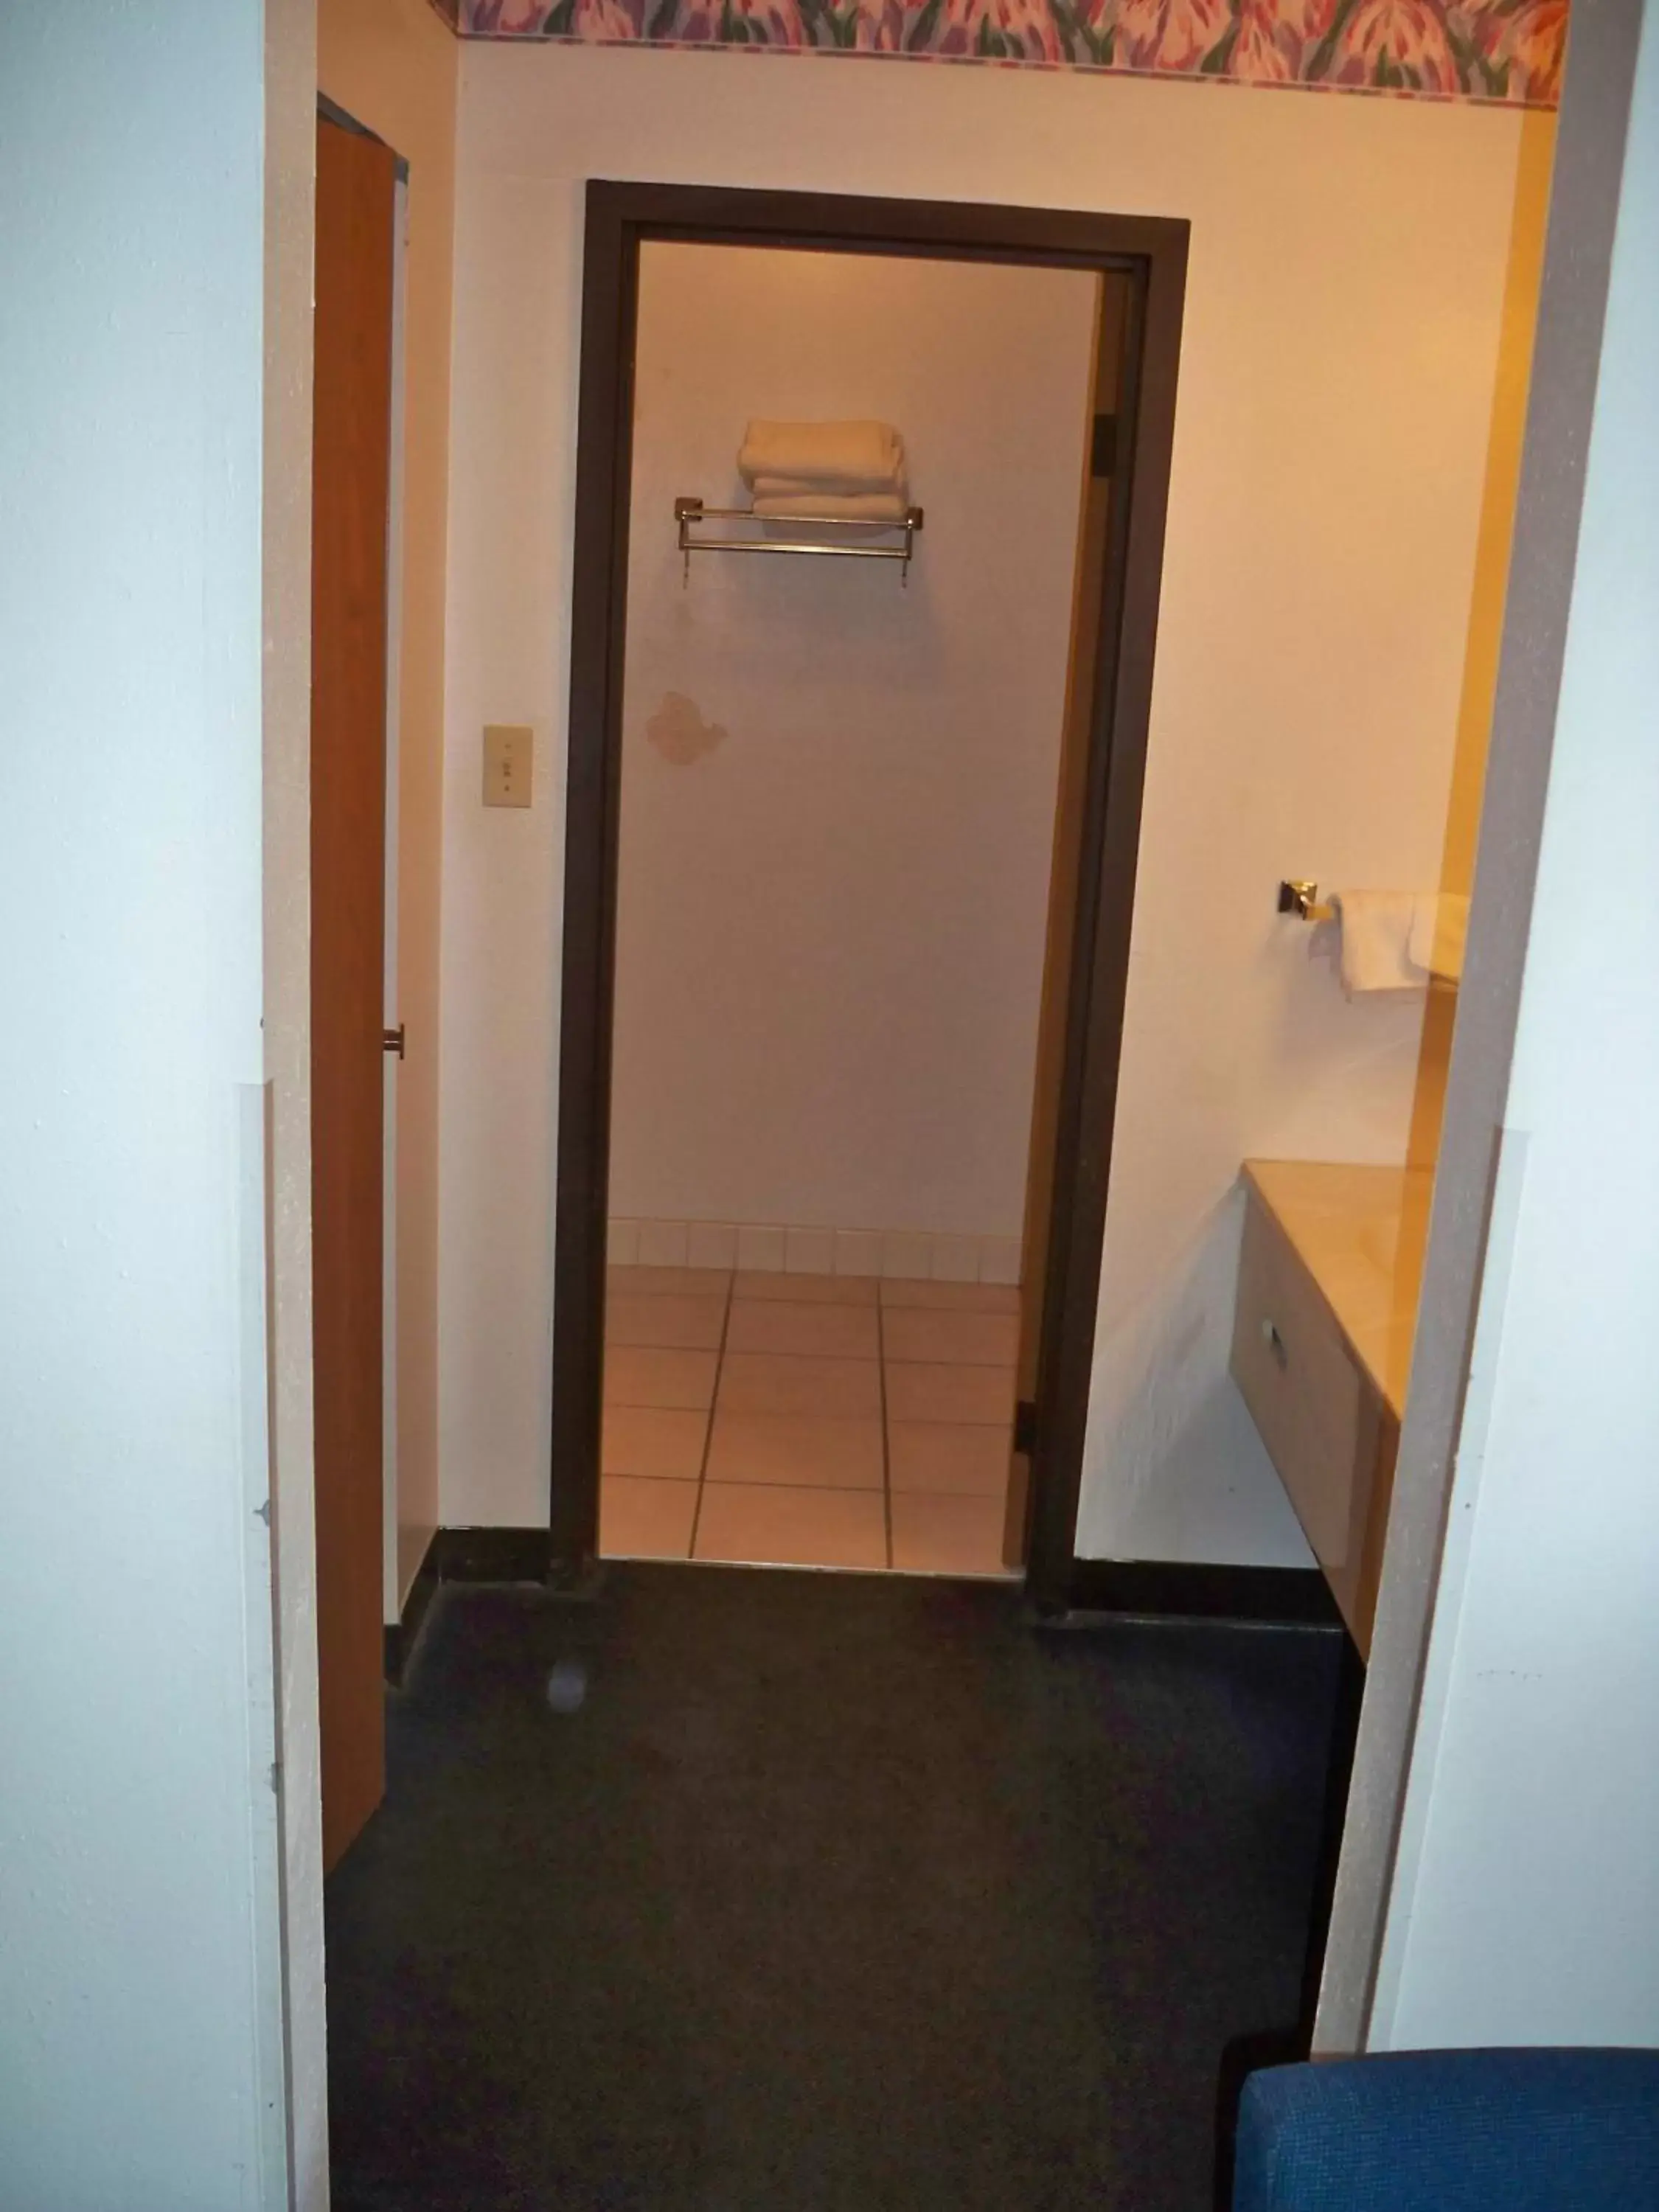 Bathroom in Economy Inn Wentzville